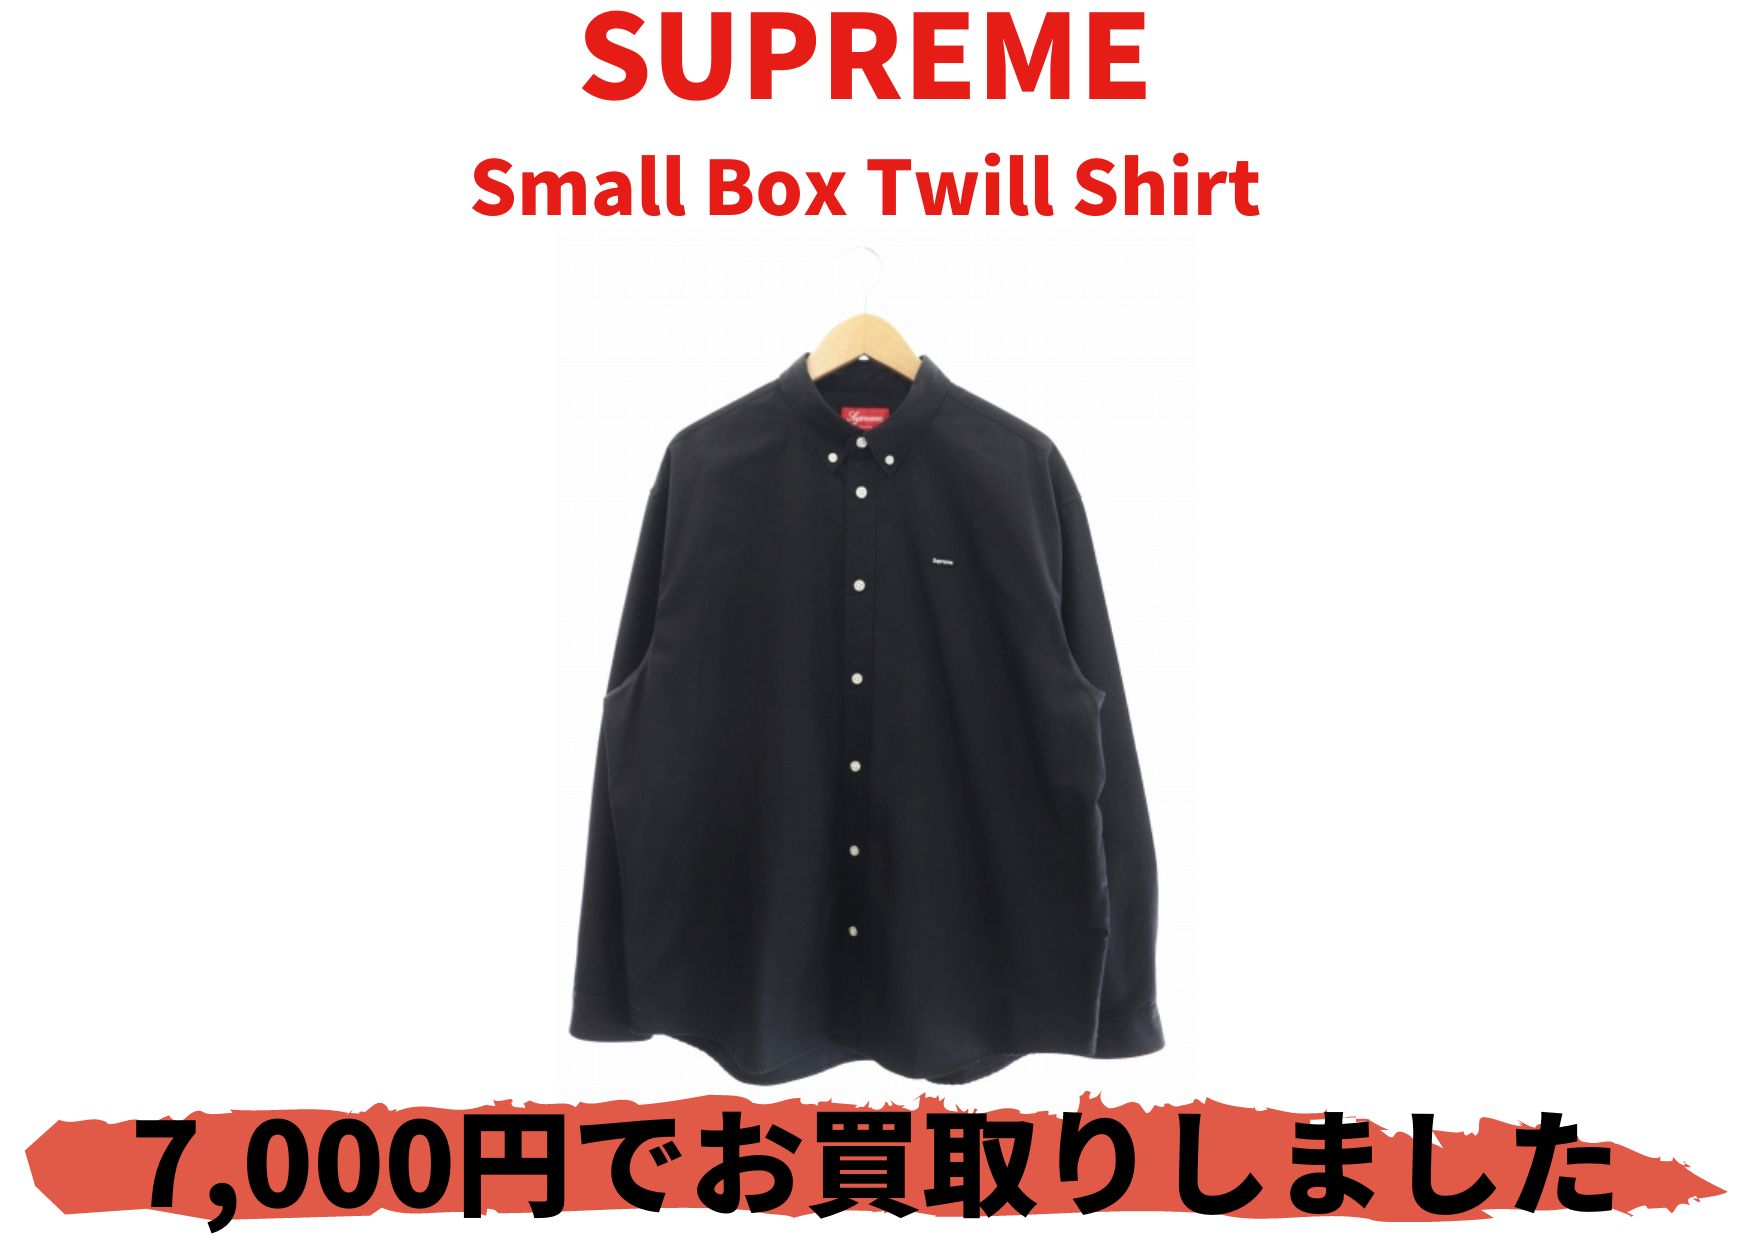 SUPREME Small Box Twill Shirt